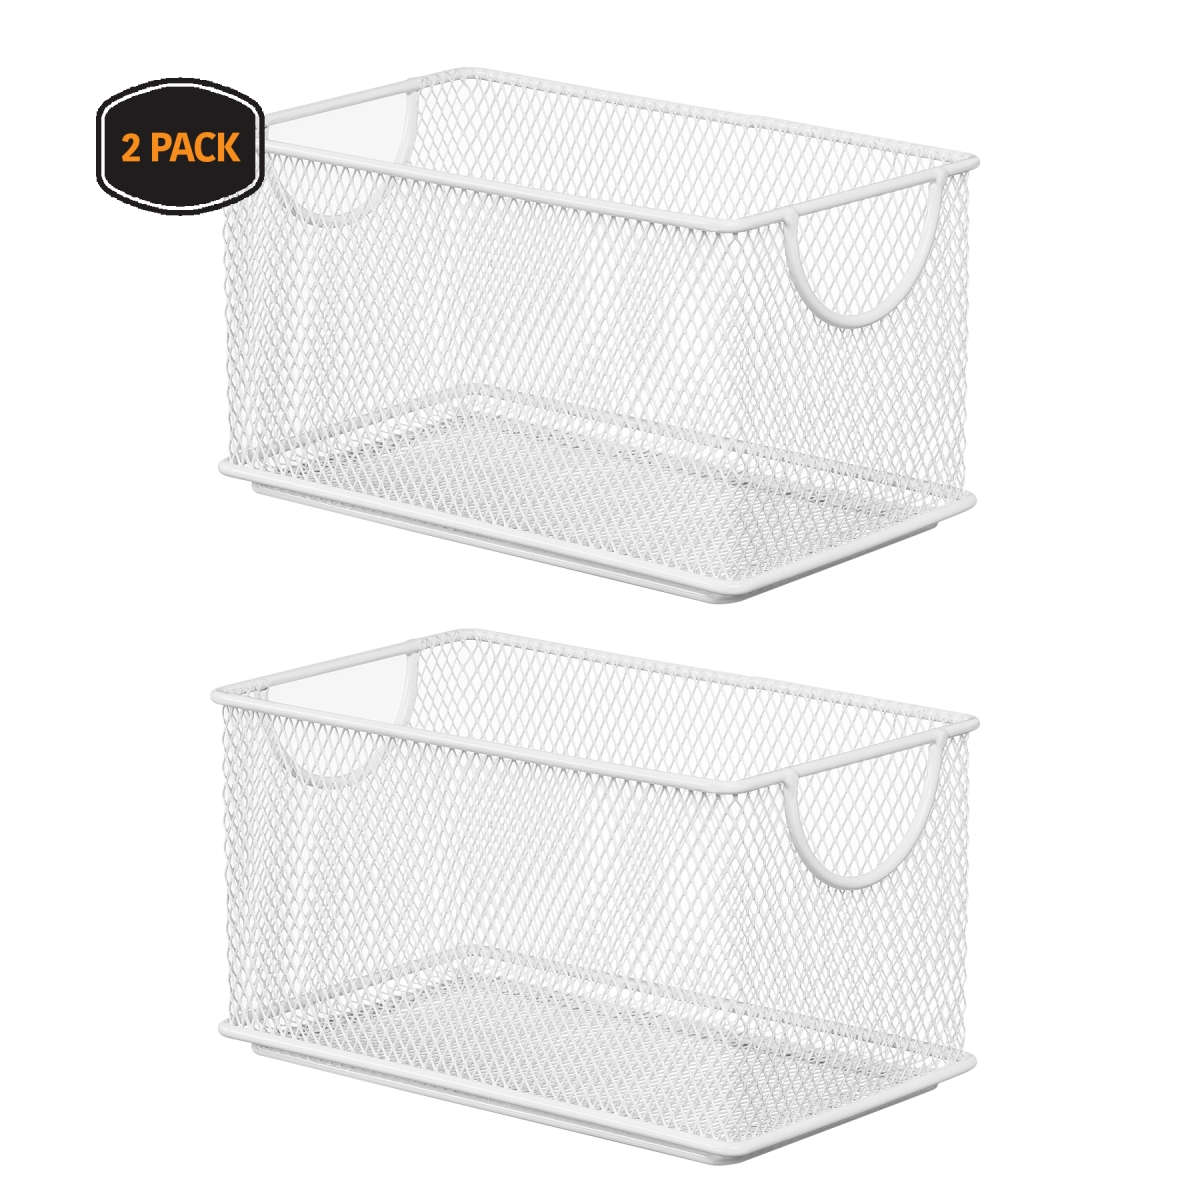 2529vc-2 Household Wire Mesh Open Bin Shelf Storage Basket With Upper Organizer, White - 4.3 X 4.3 X 7.75 In. - Pack Of 2